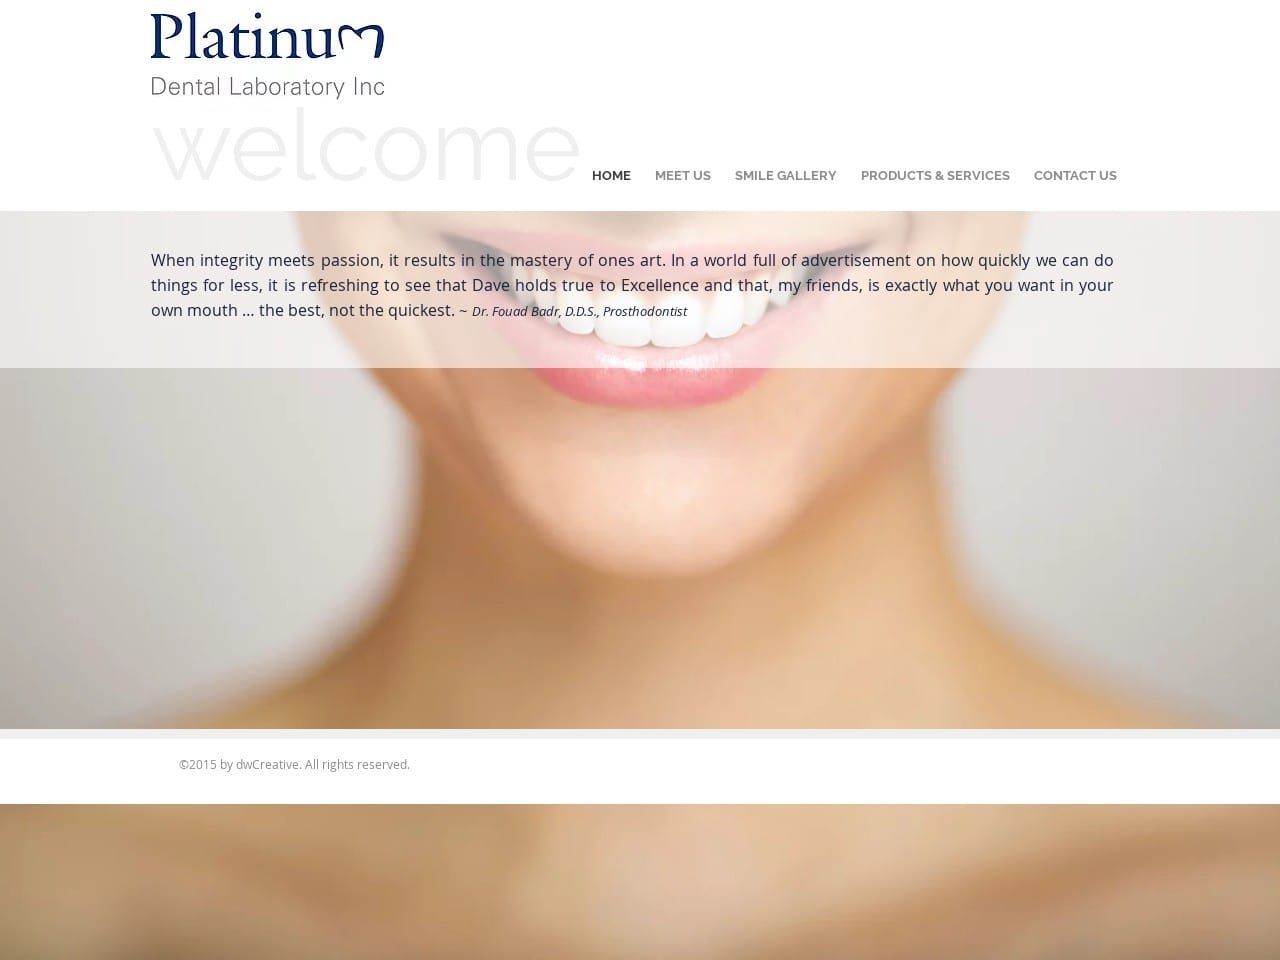 Platinum Dental Lab Website Screenshot from platinumdentallab.com